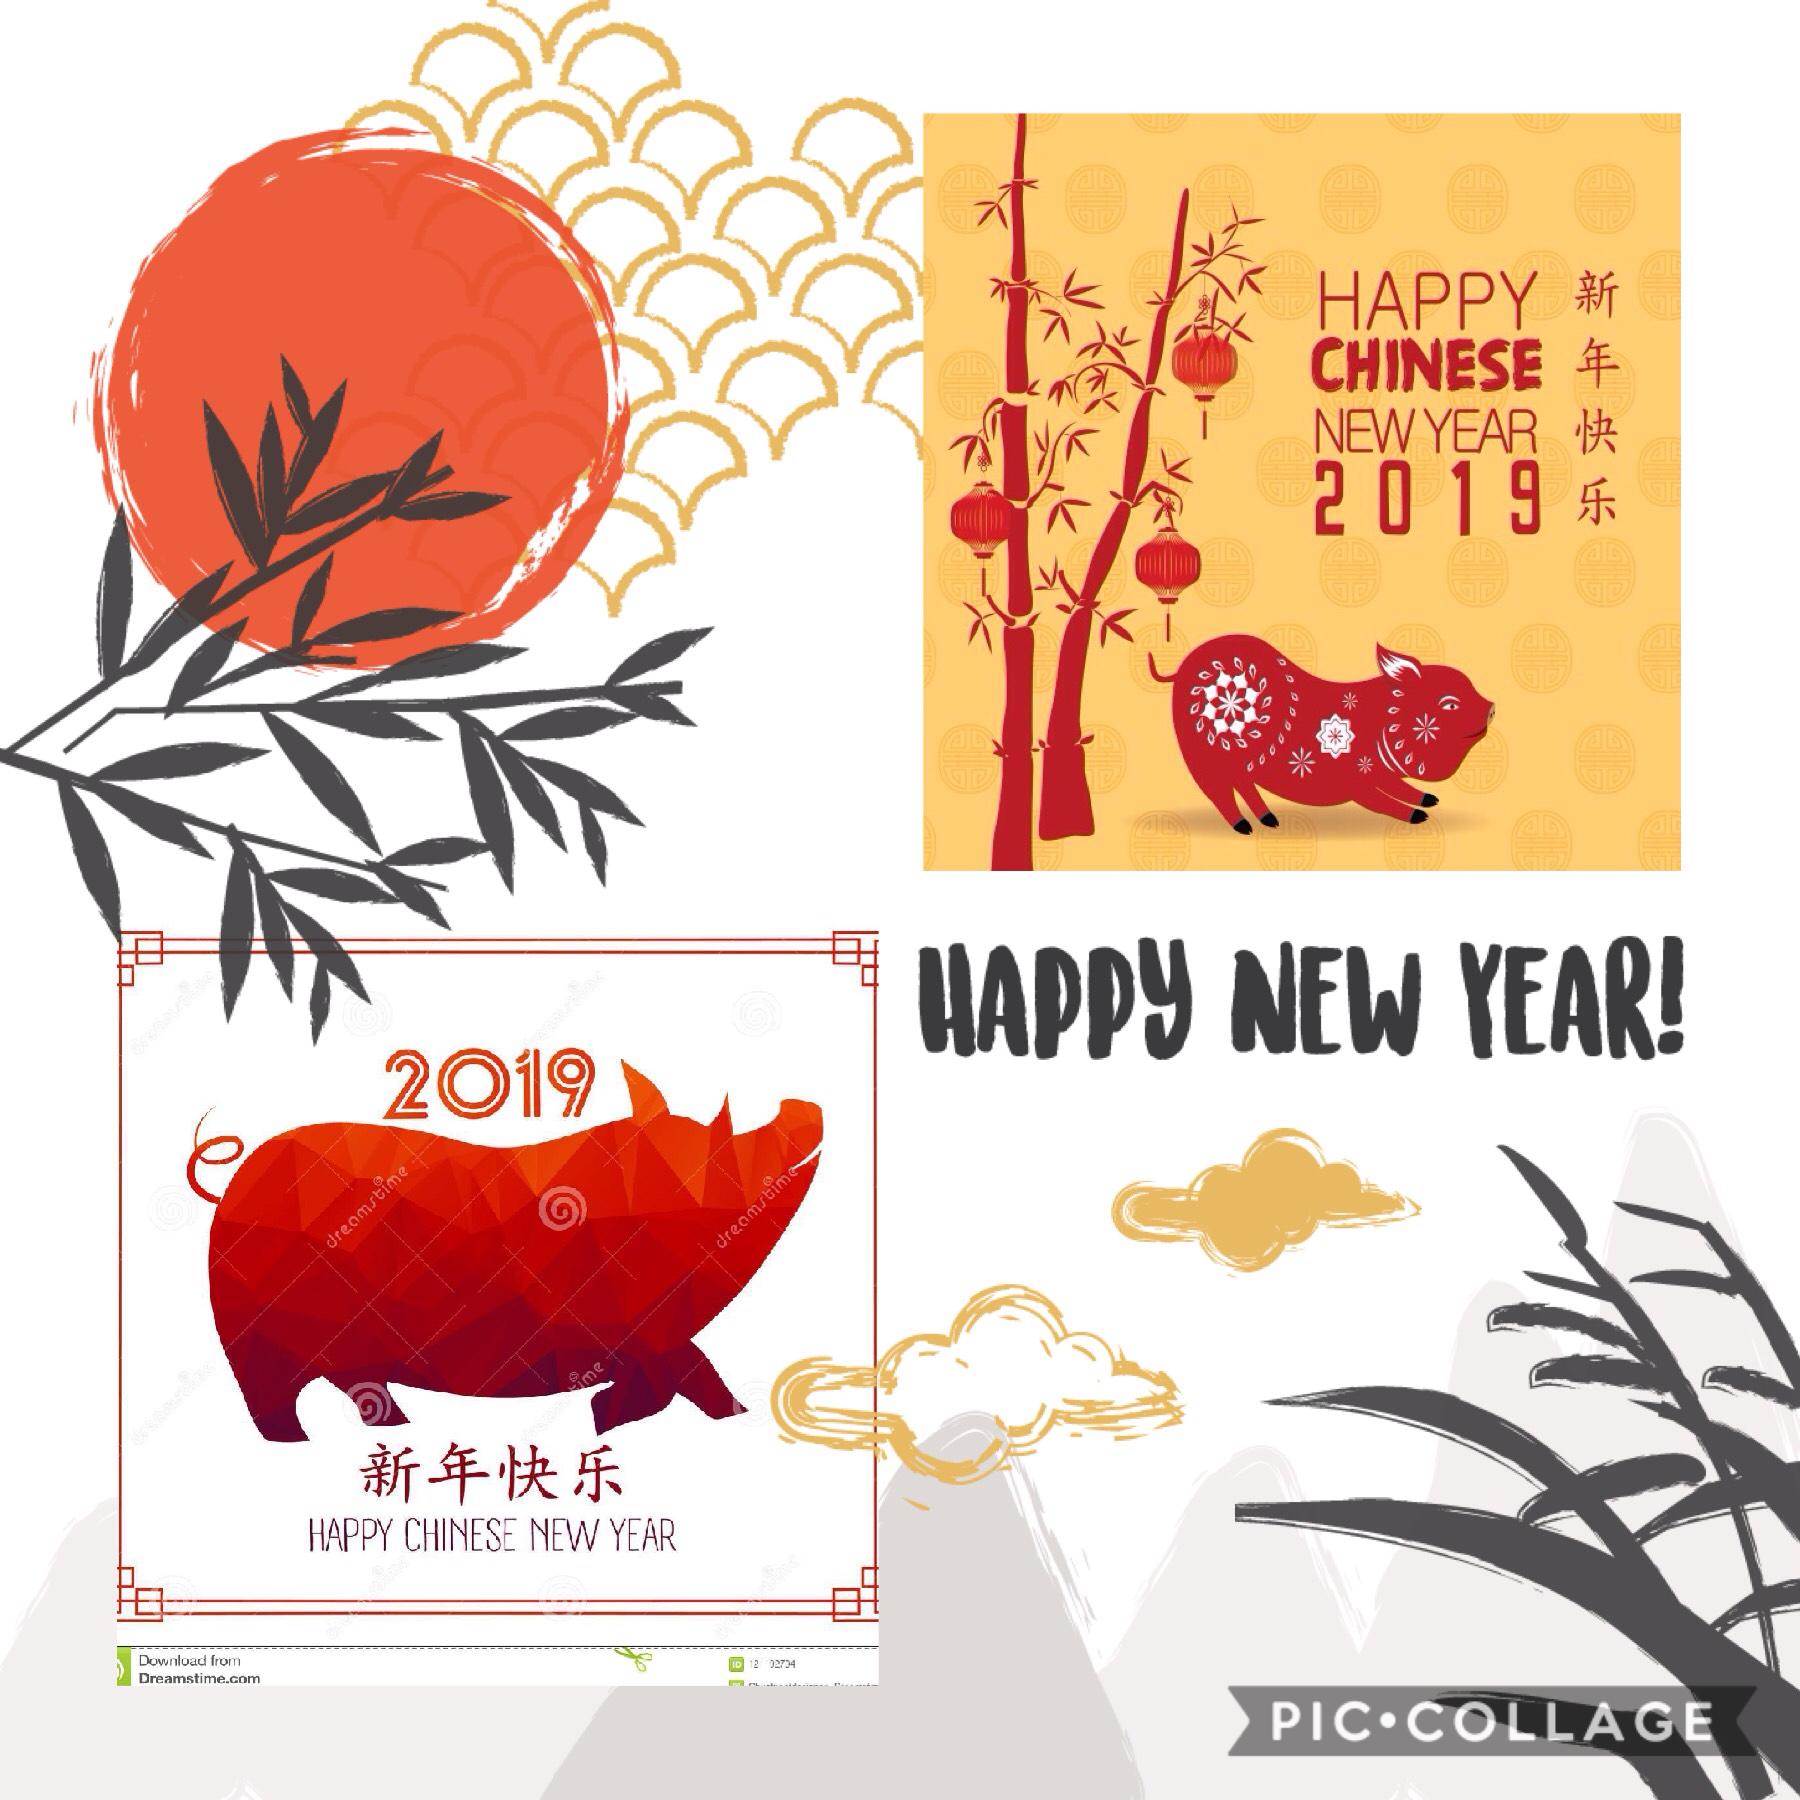 Happy Chinese New Year 😁